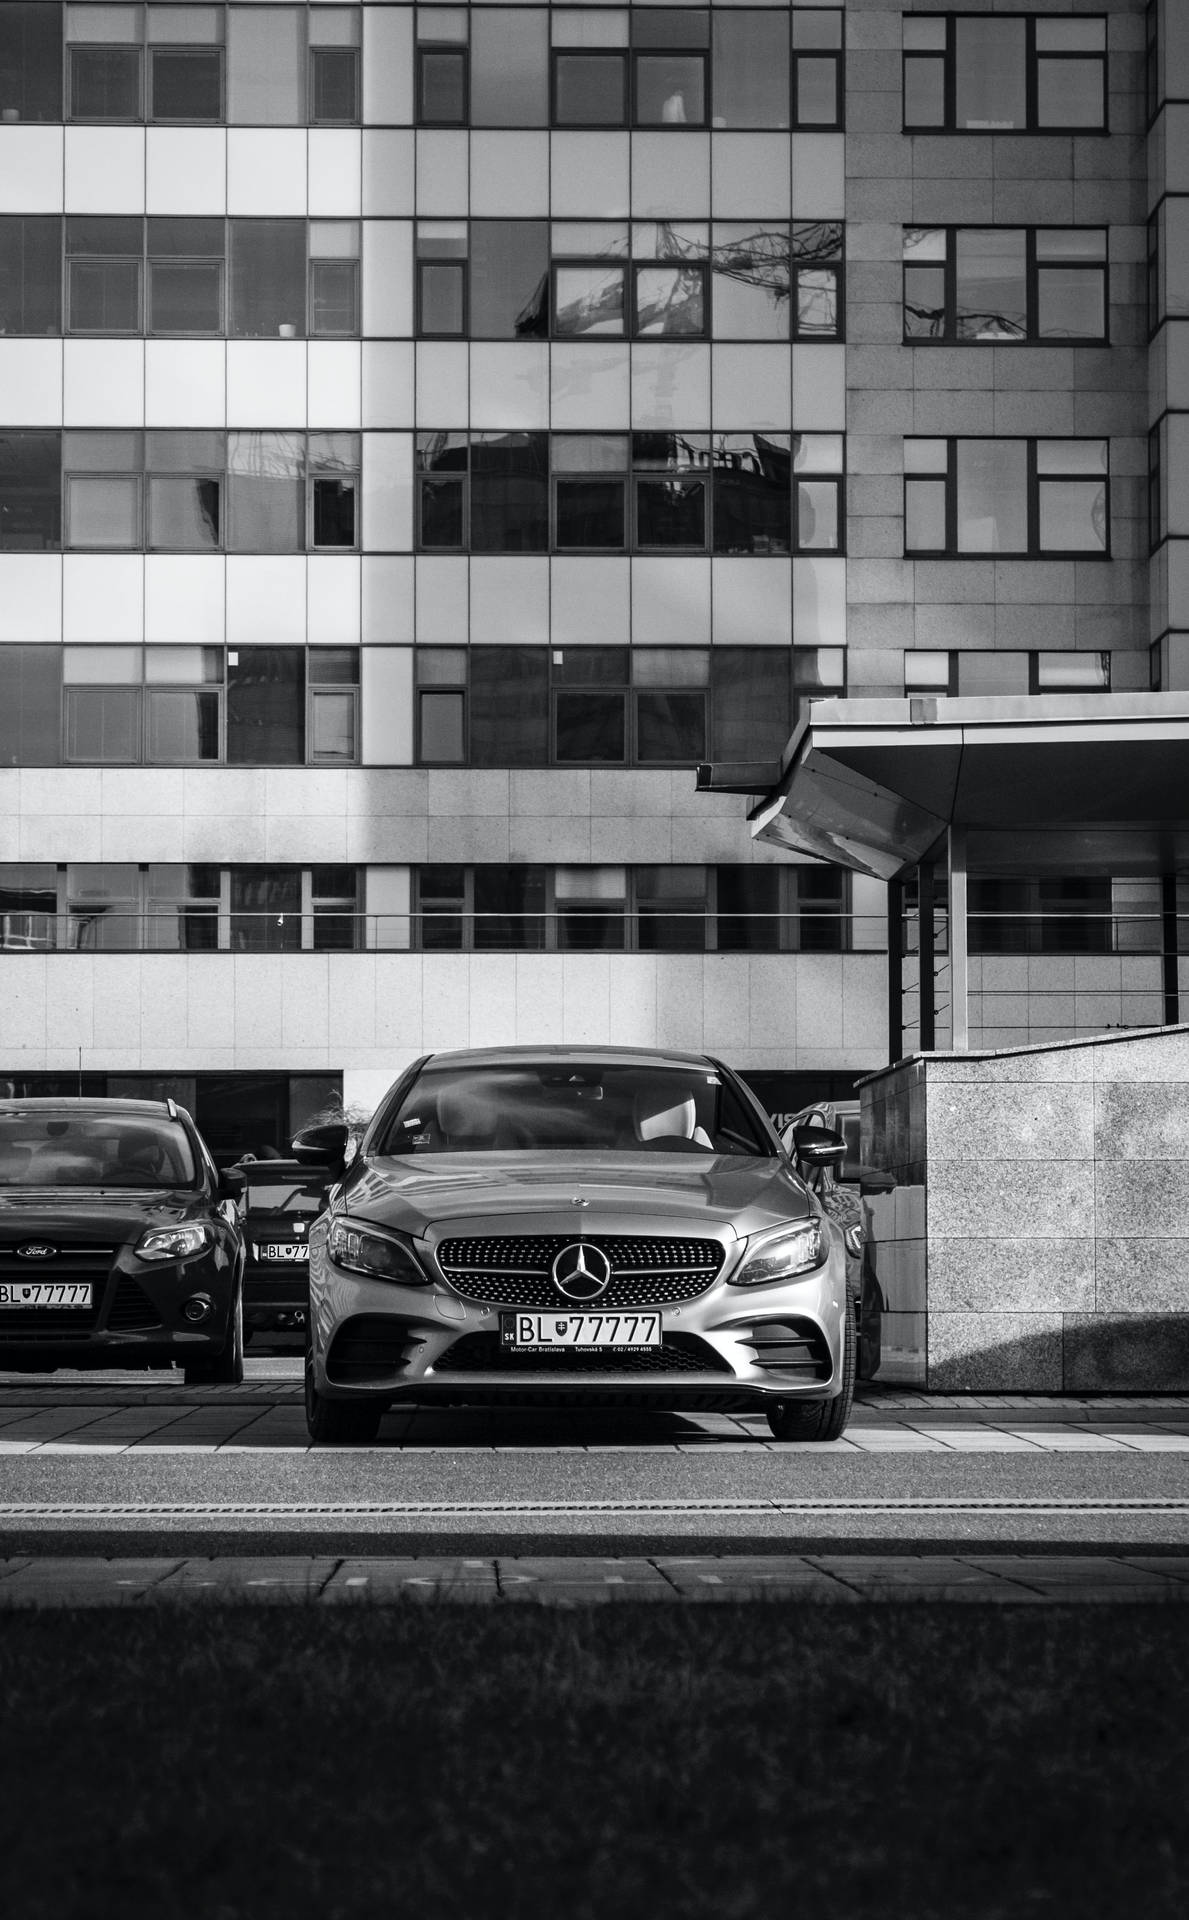 Parked Mercedes Benz E Class Background